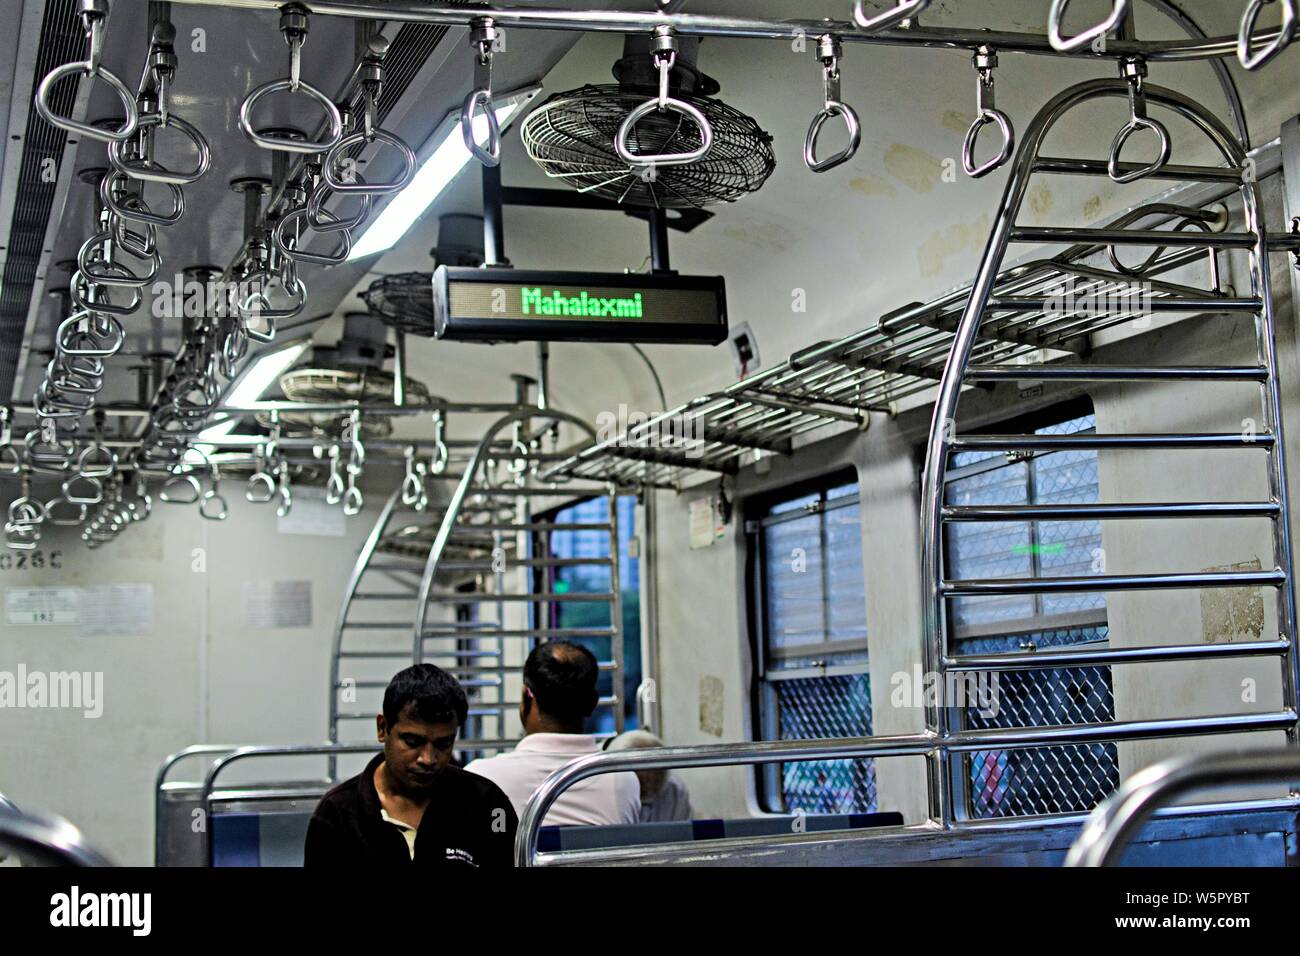 Anzeige im lokalen Zug Mahalaxmi Bahnhof Mumbai Maharashtra Indien Asien Stockfoto